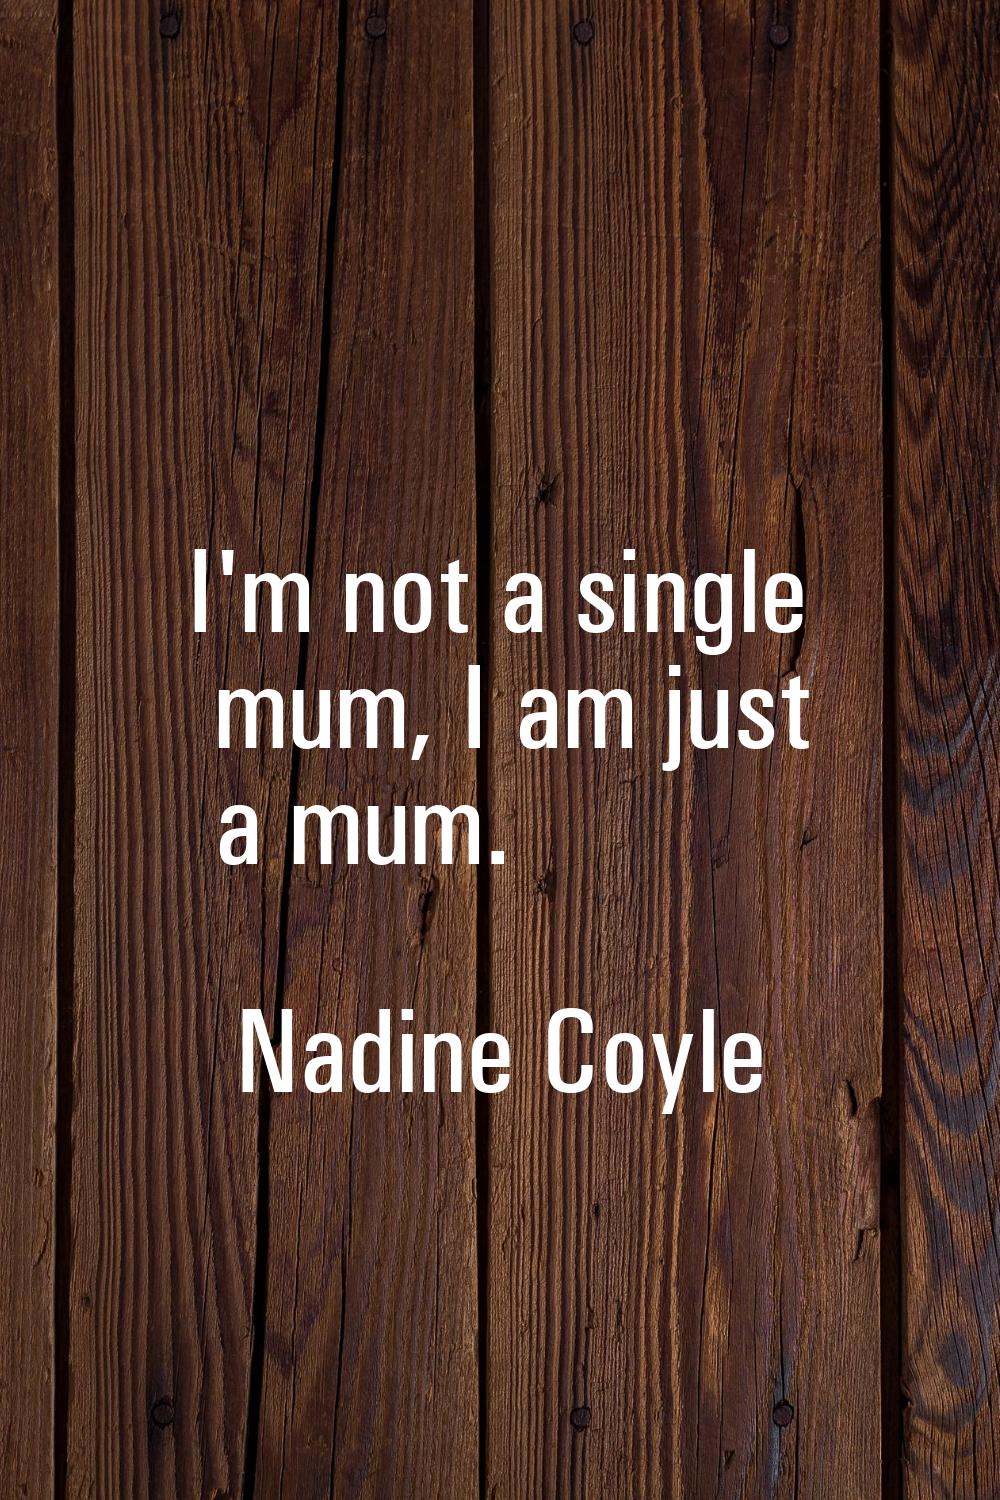 I'm not a single mum, I am just a mum.